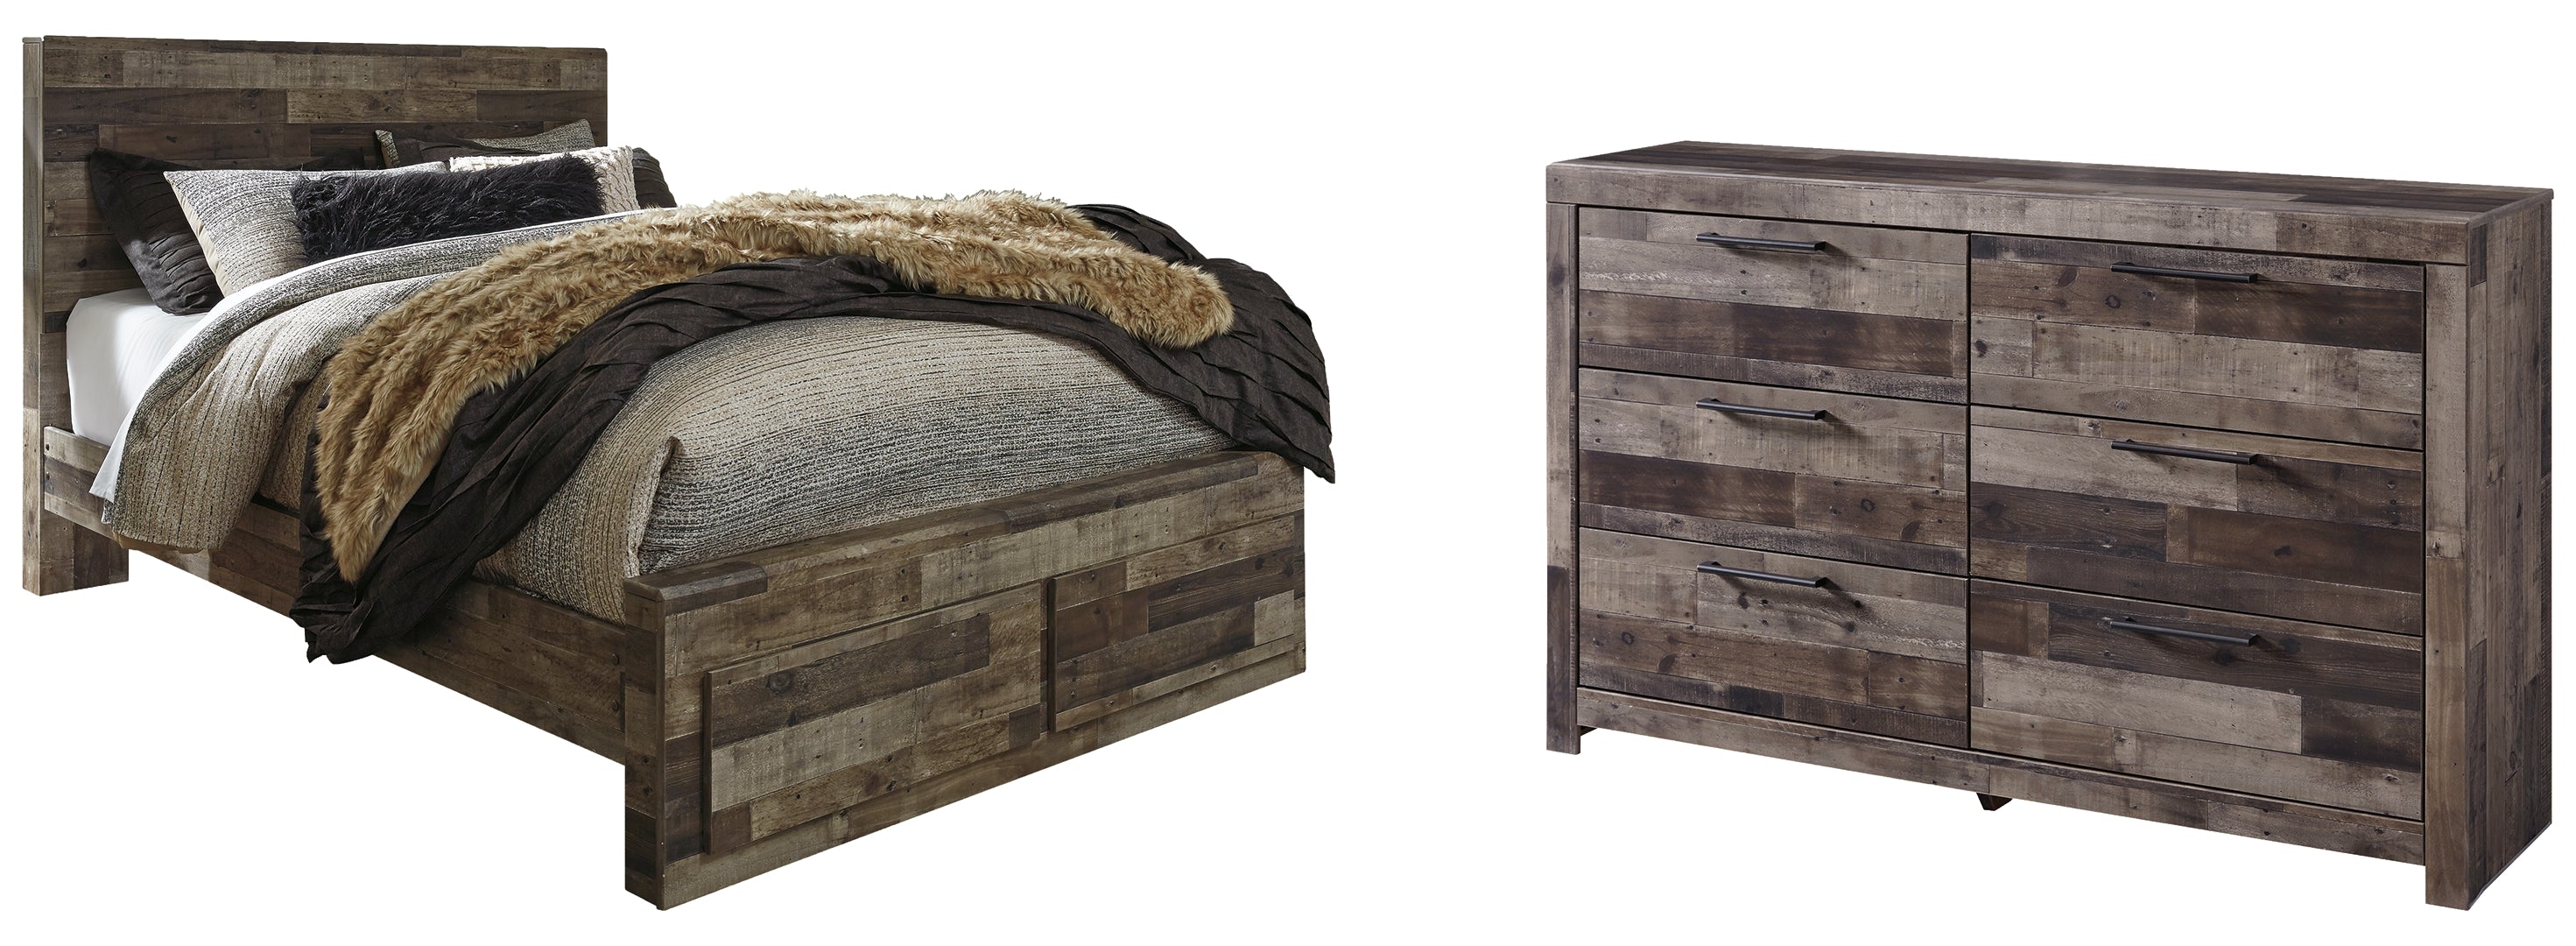 Derekson Queen Panel Bed with 2 Storage Drawers with Dresser